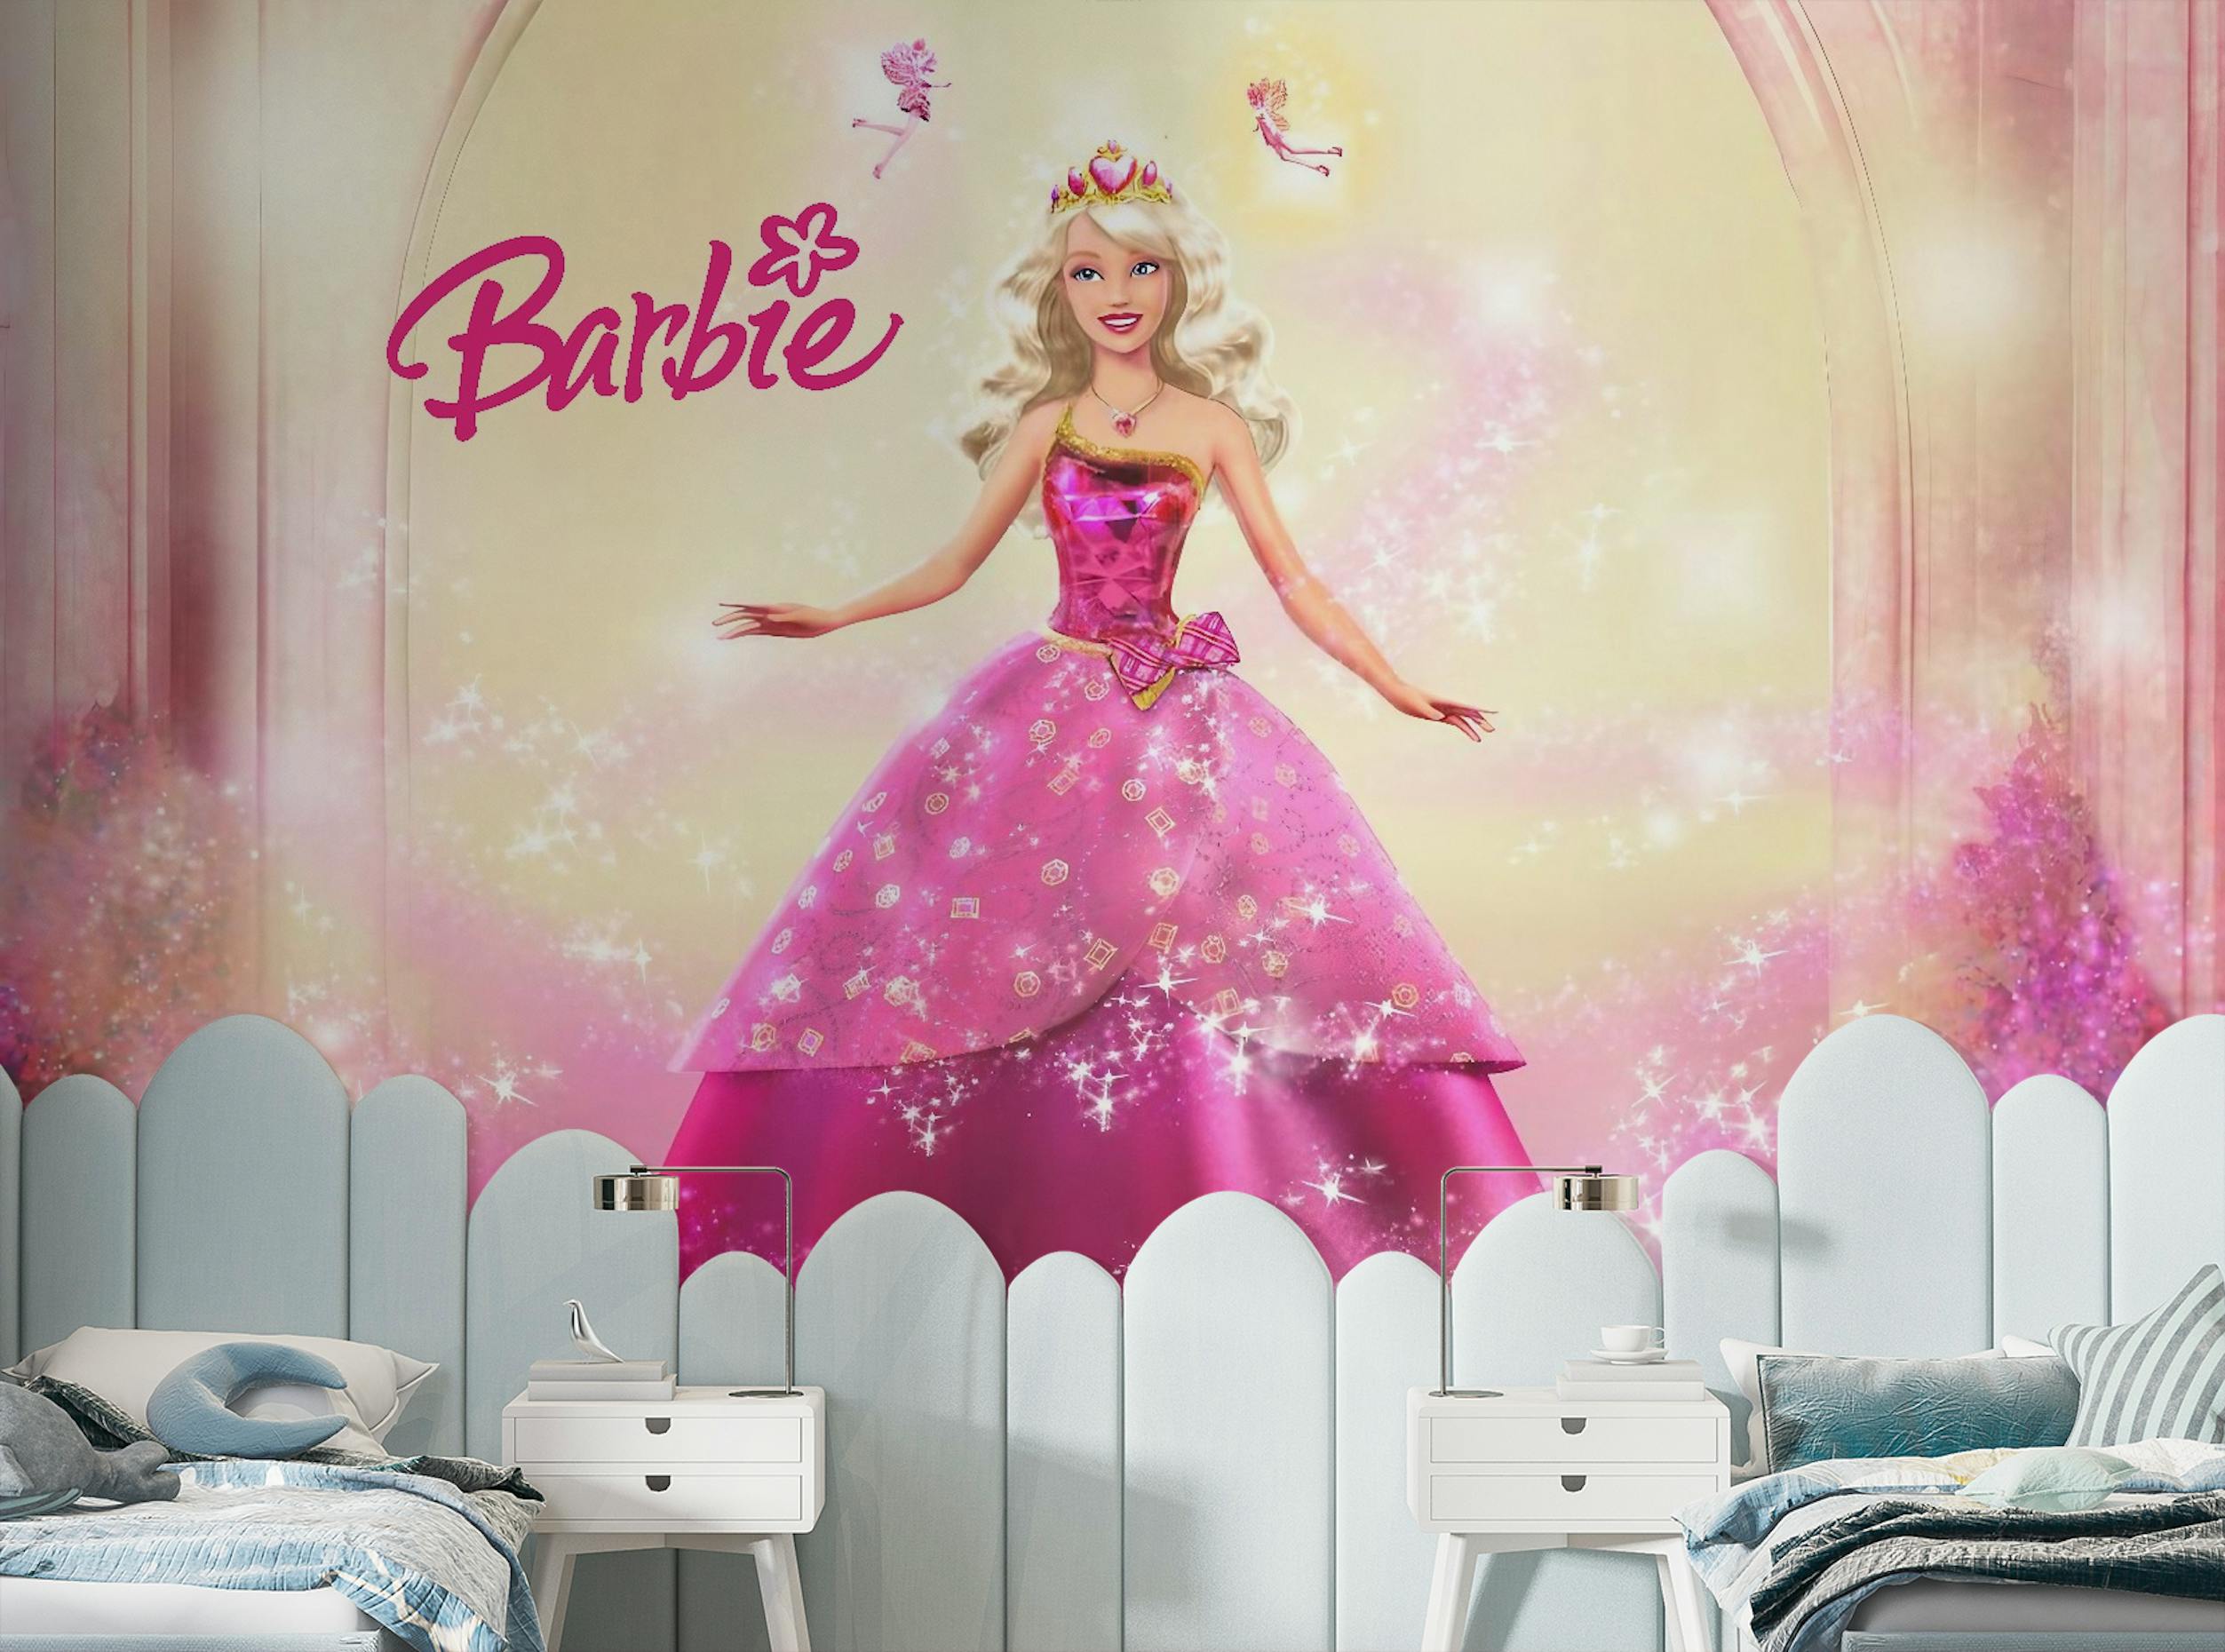 barbie wallpaper for bedroom